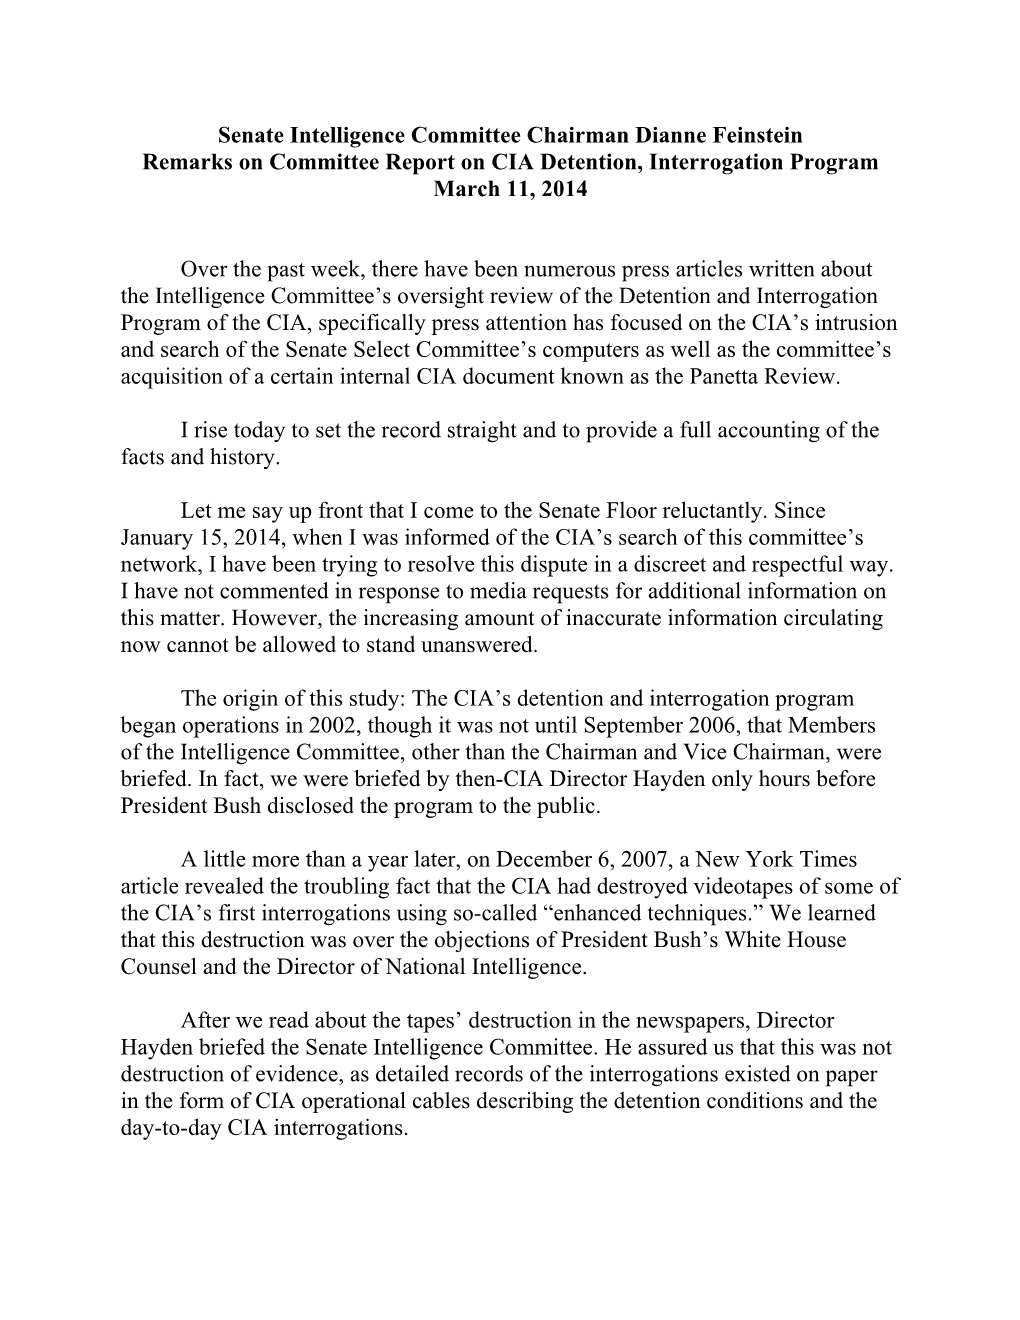 Senate Intelligence Committee Chairman Dianne Feinstein Remarks on Committee Report on CIA Detention, Interrogation Program March 11, 2014